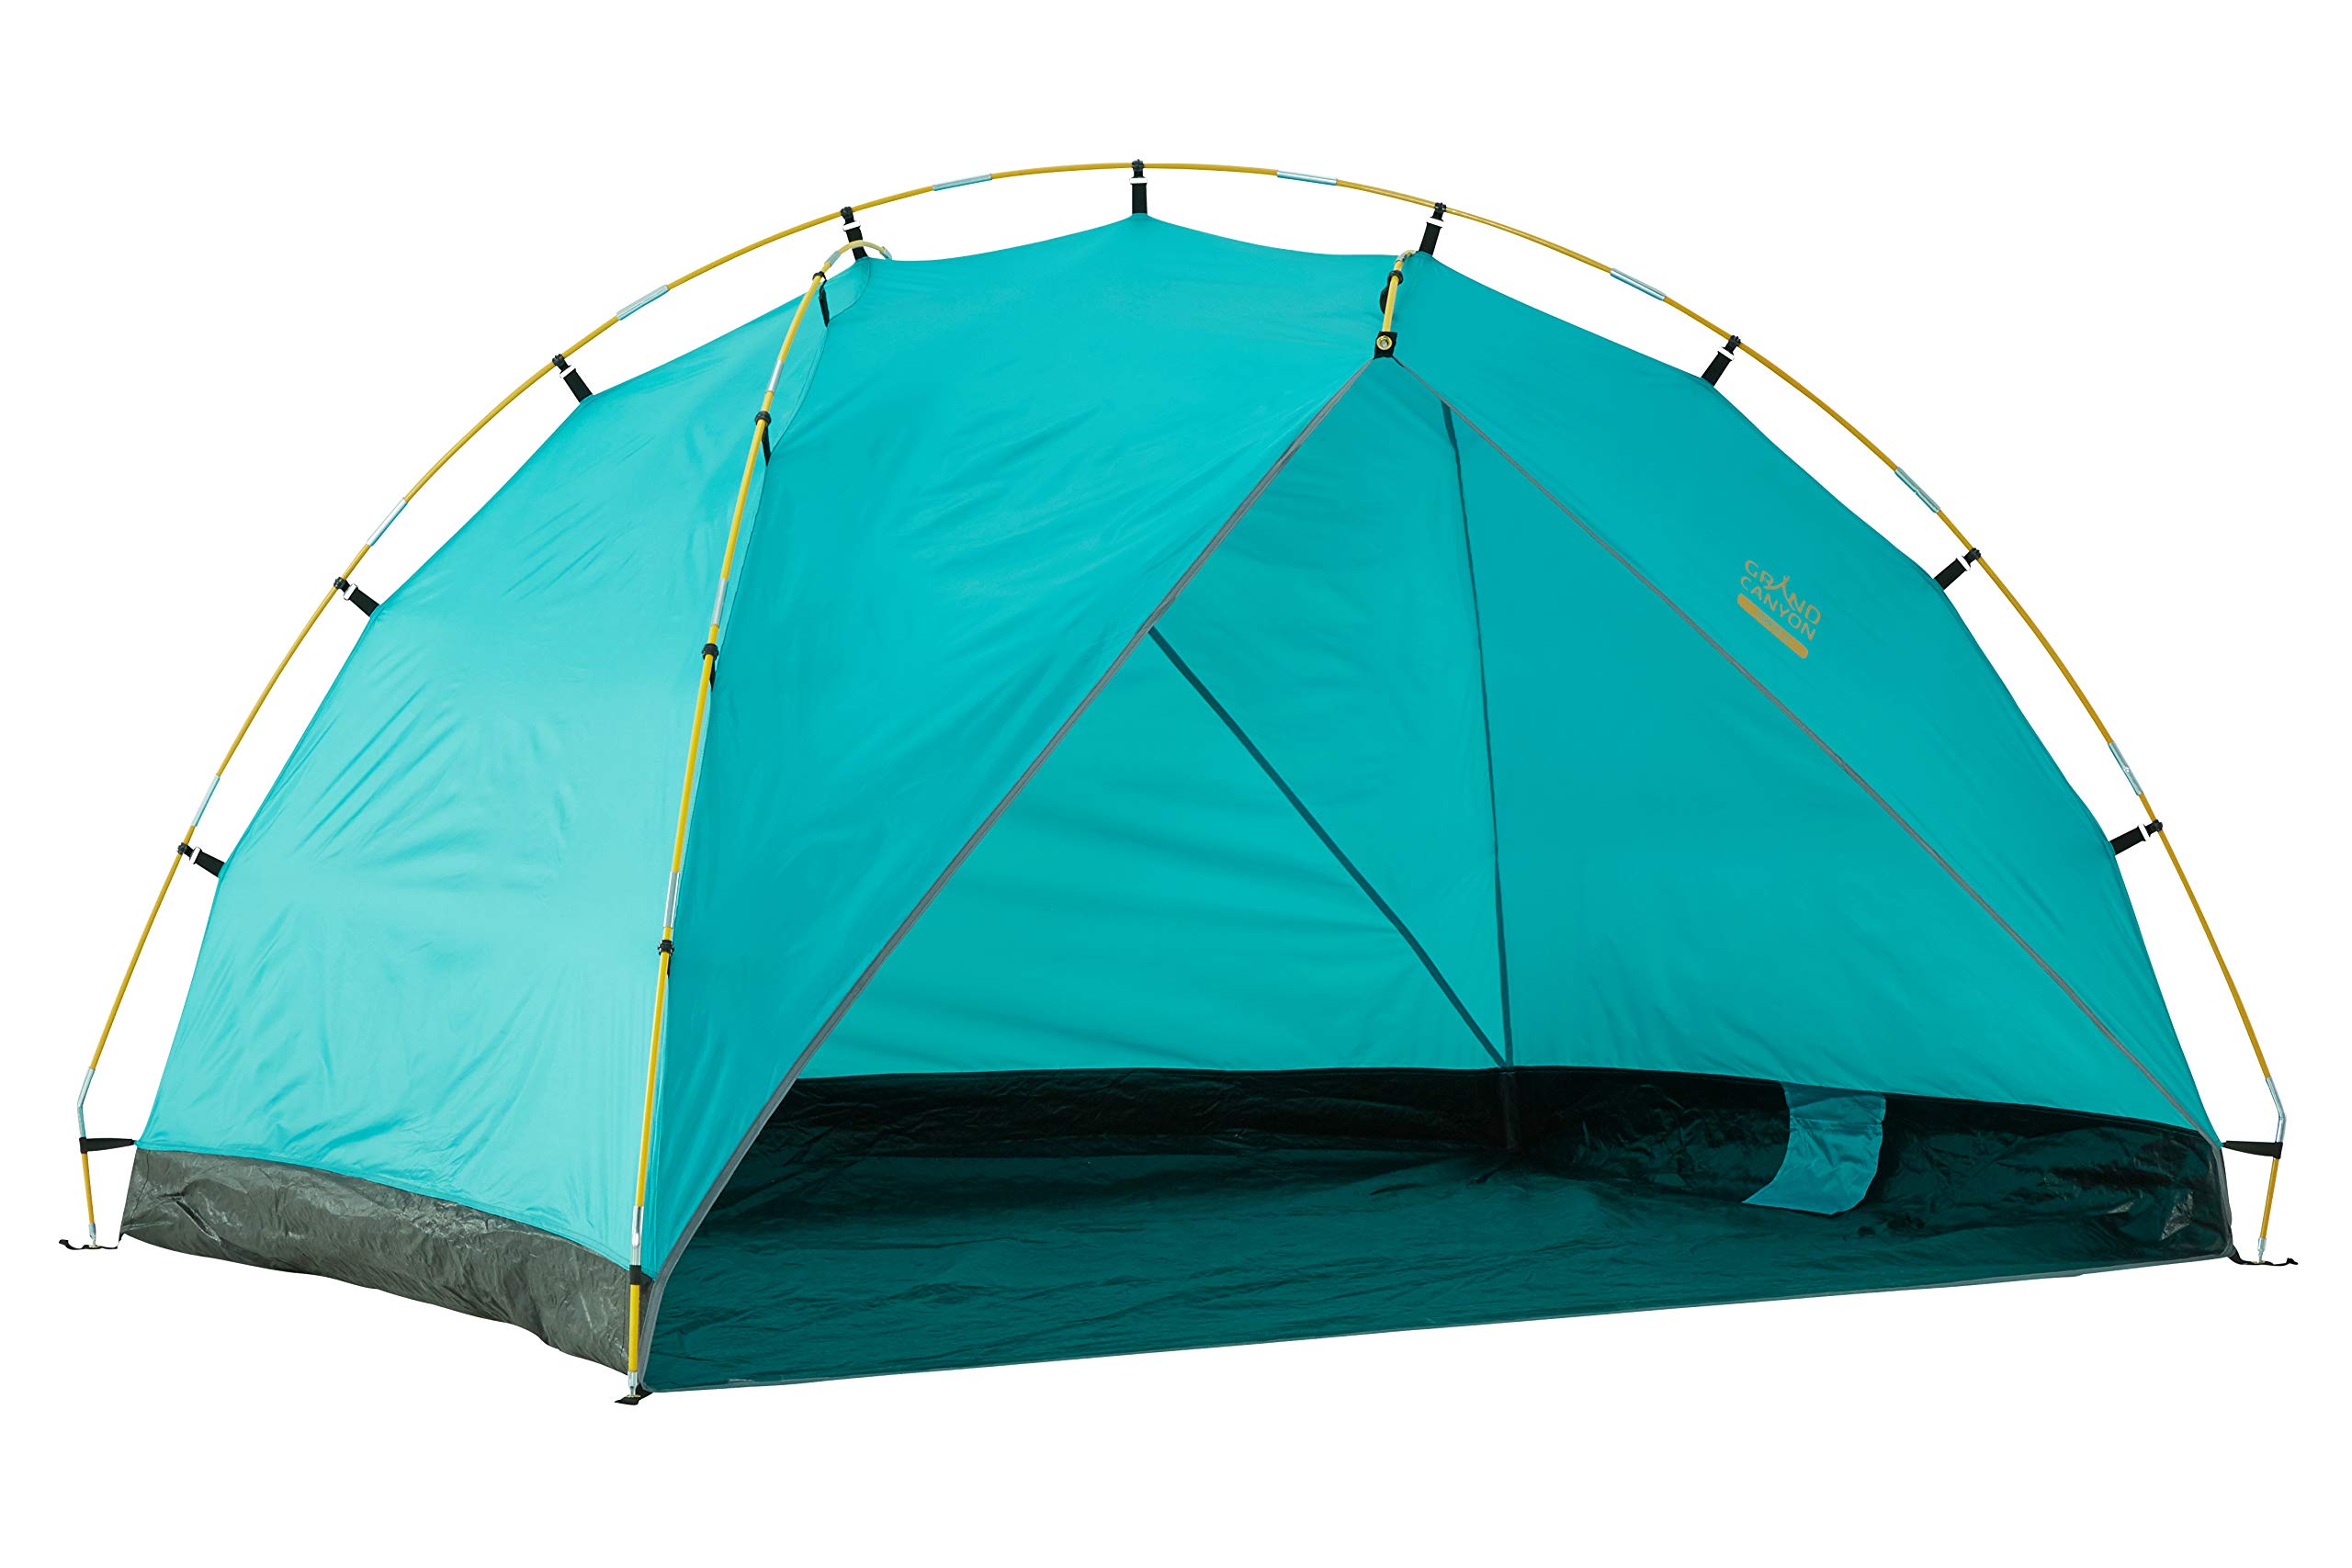 Grand Canyon Tonto Beach Tent 3 - Strandzelt/Strandmuschel 210 x 160 cm - Kuppel-Zelt, UV50+, Wasserdicht - Blue Grass (Blau)